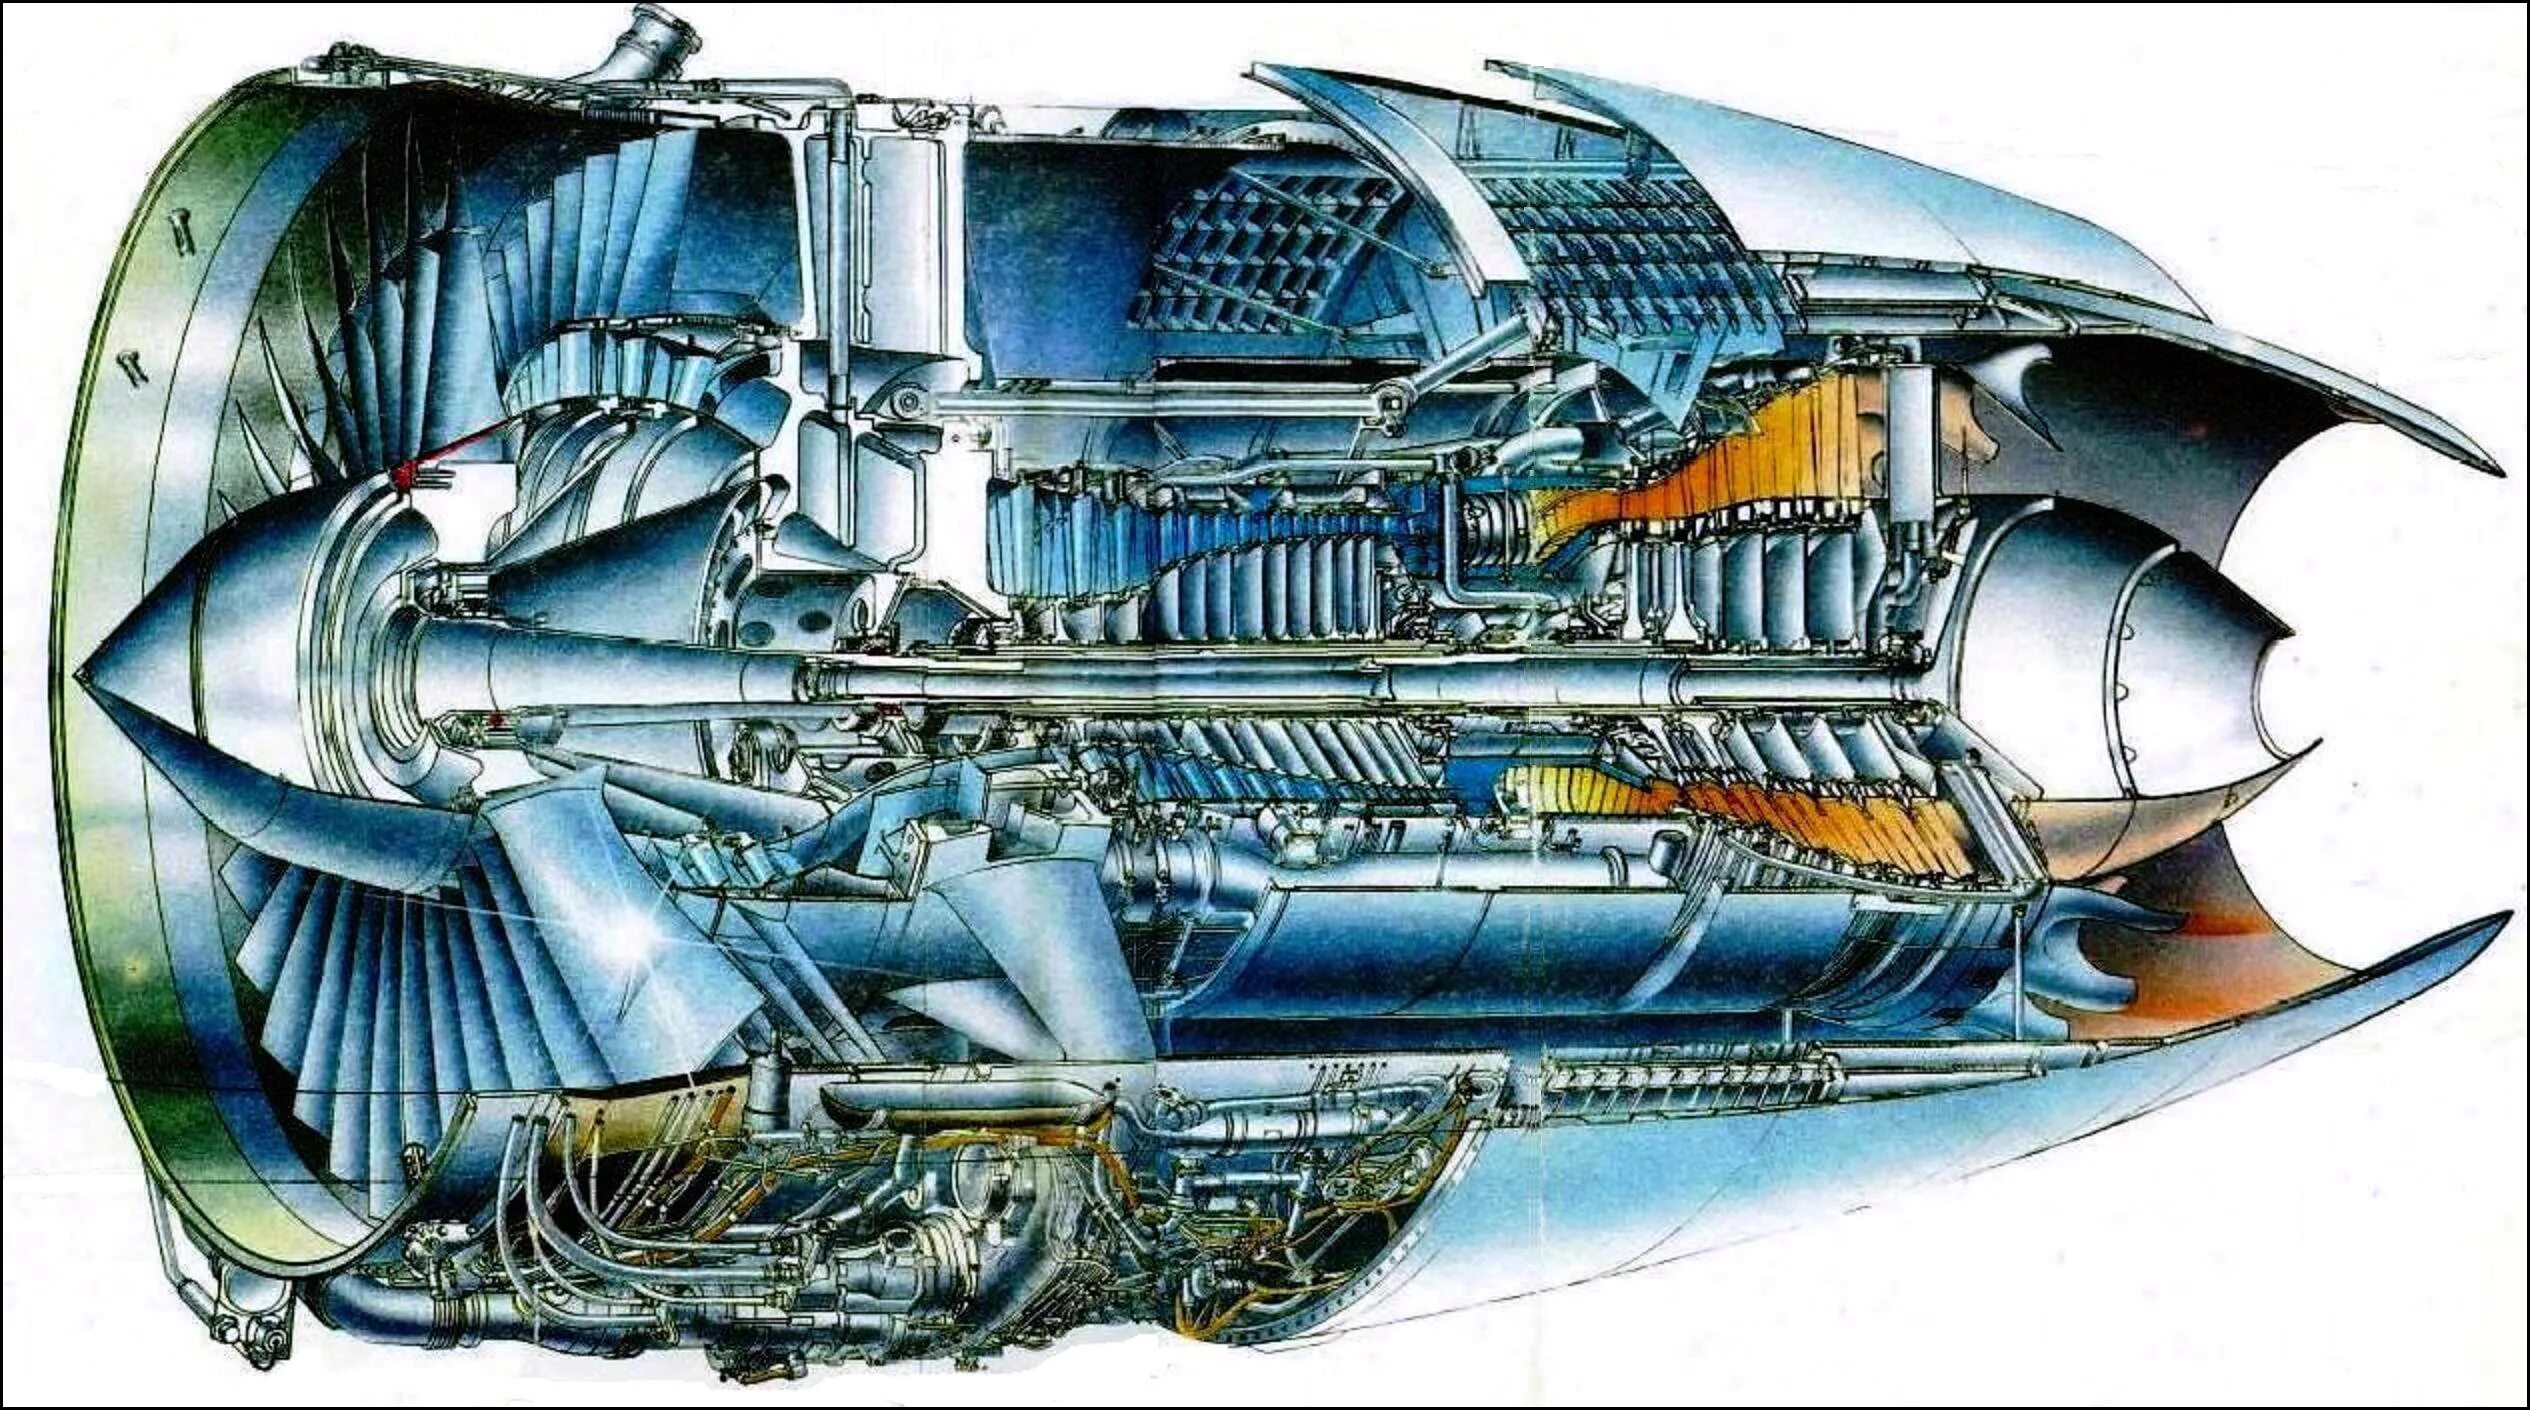 Двигатель пс 90а. Двигатель ПС-90a2. ПС-90а. ГТД ПС-90. Авиационный двигатель ПС-90а.